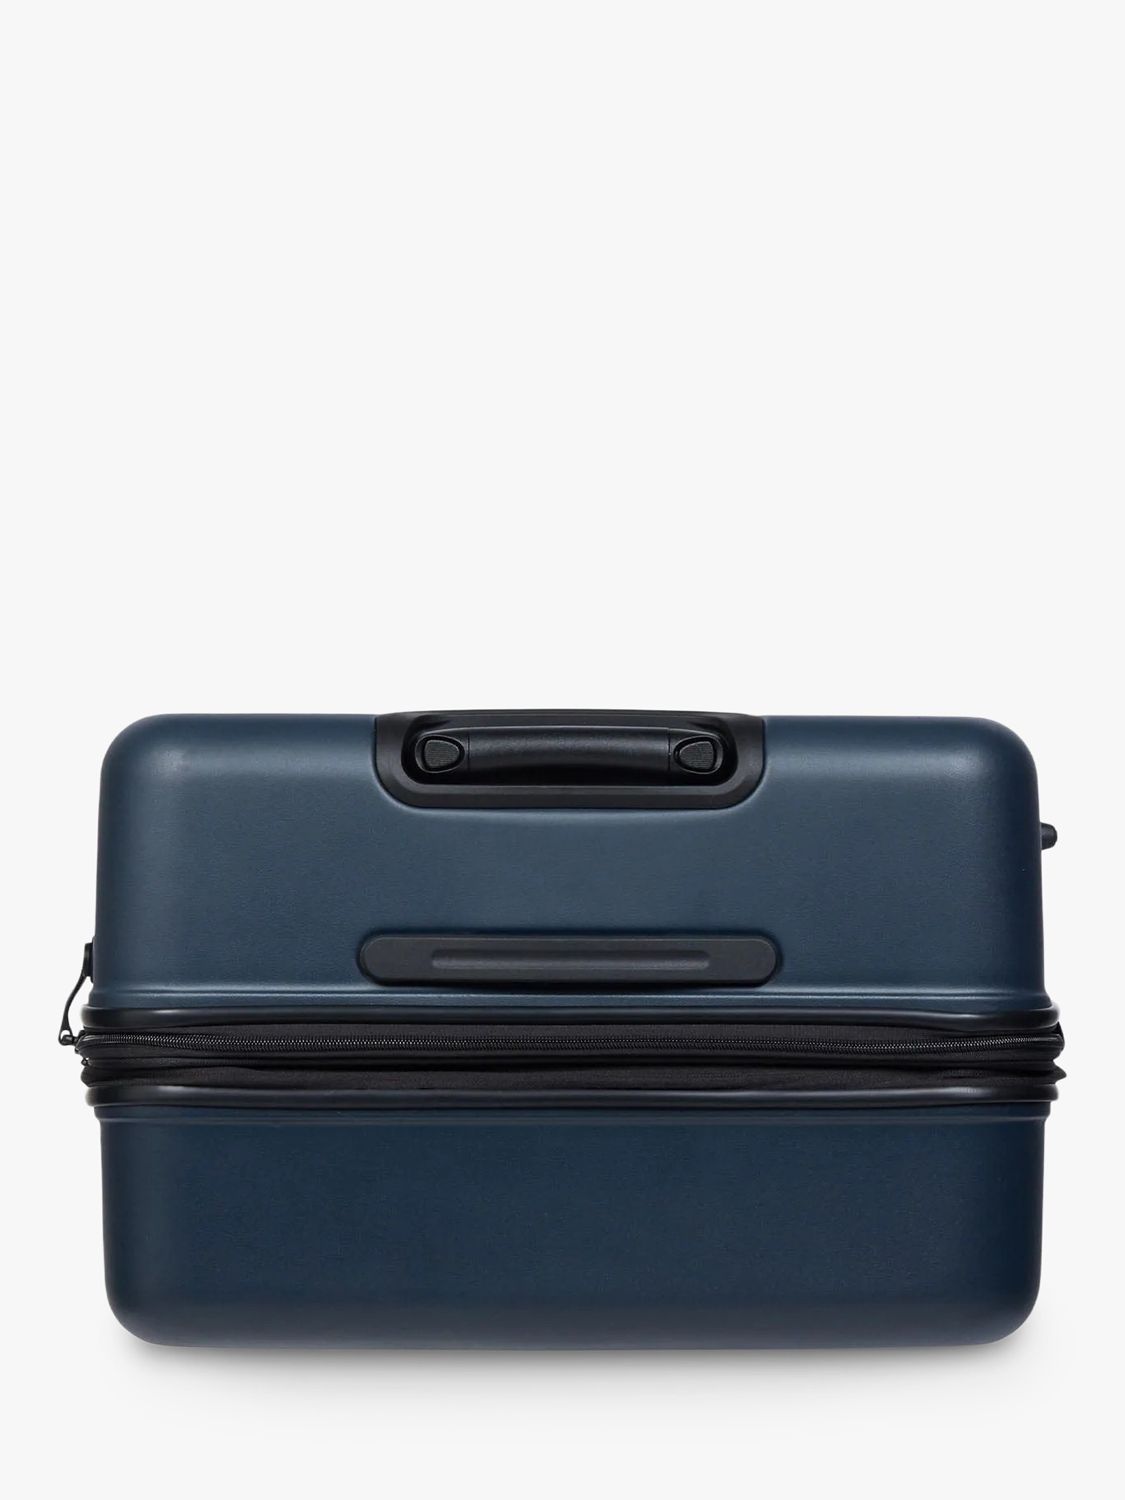 Antler Clifton 4-Wheel 80cm Large Expandable Suitcase, Blue